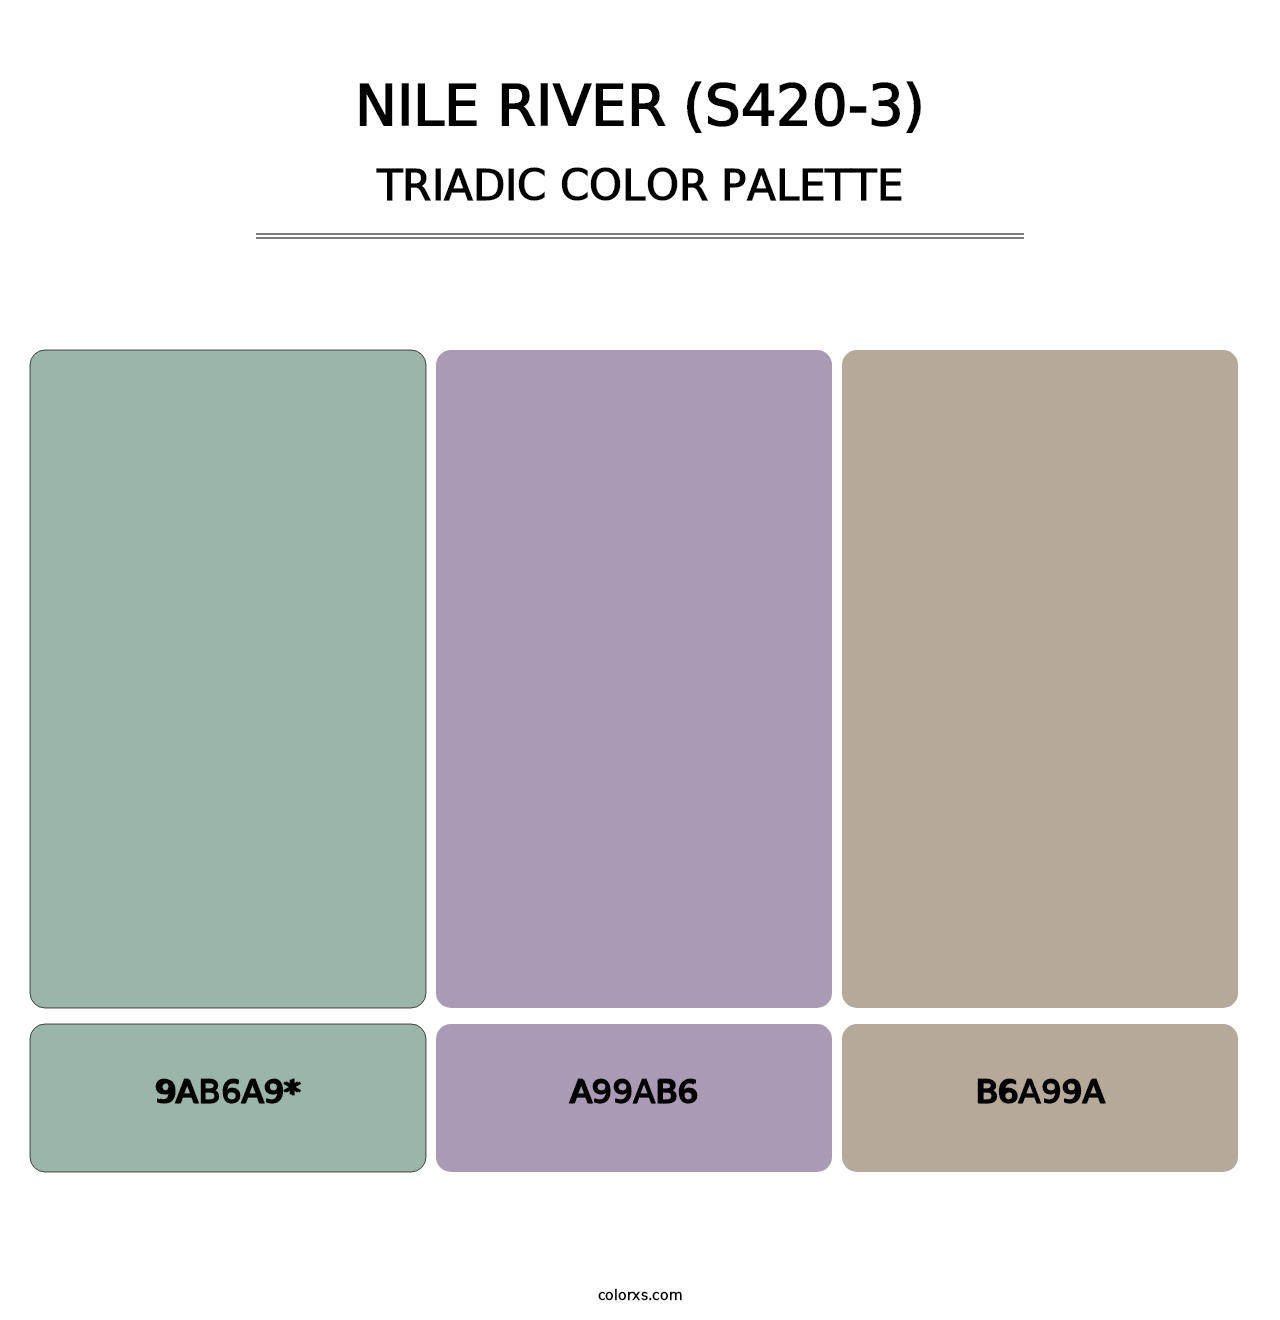 Nile River (S420-3) - Triadic Color Palette